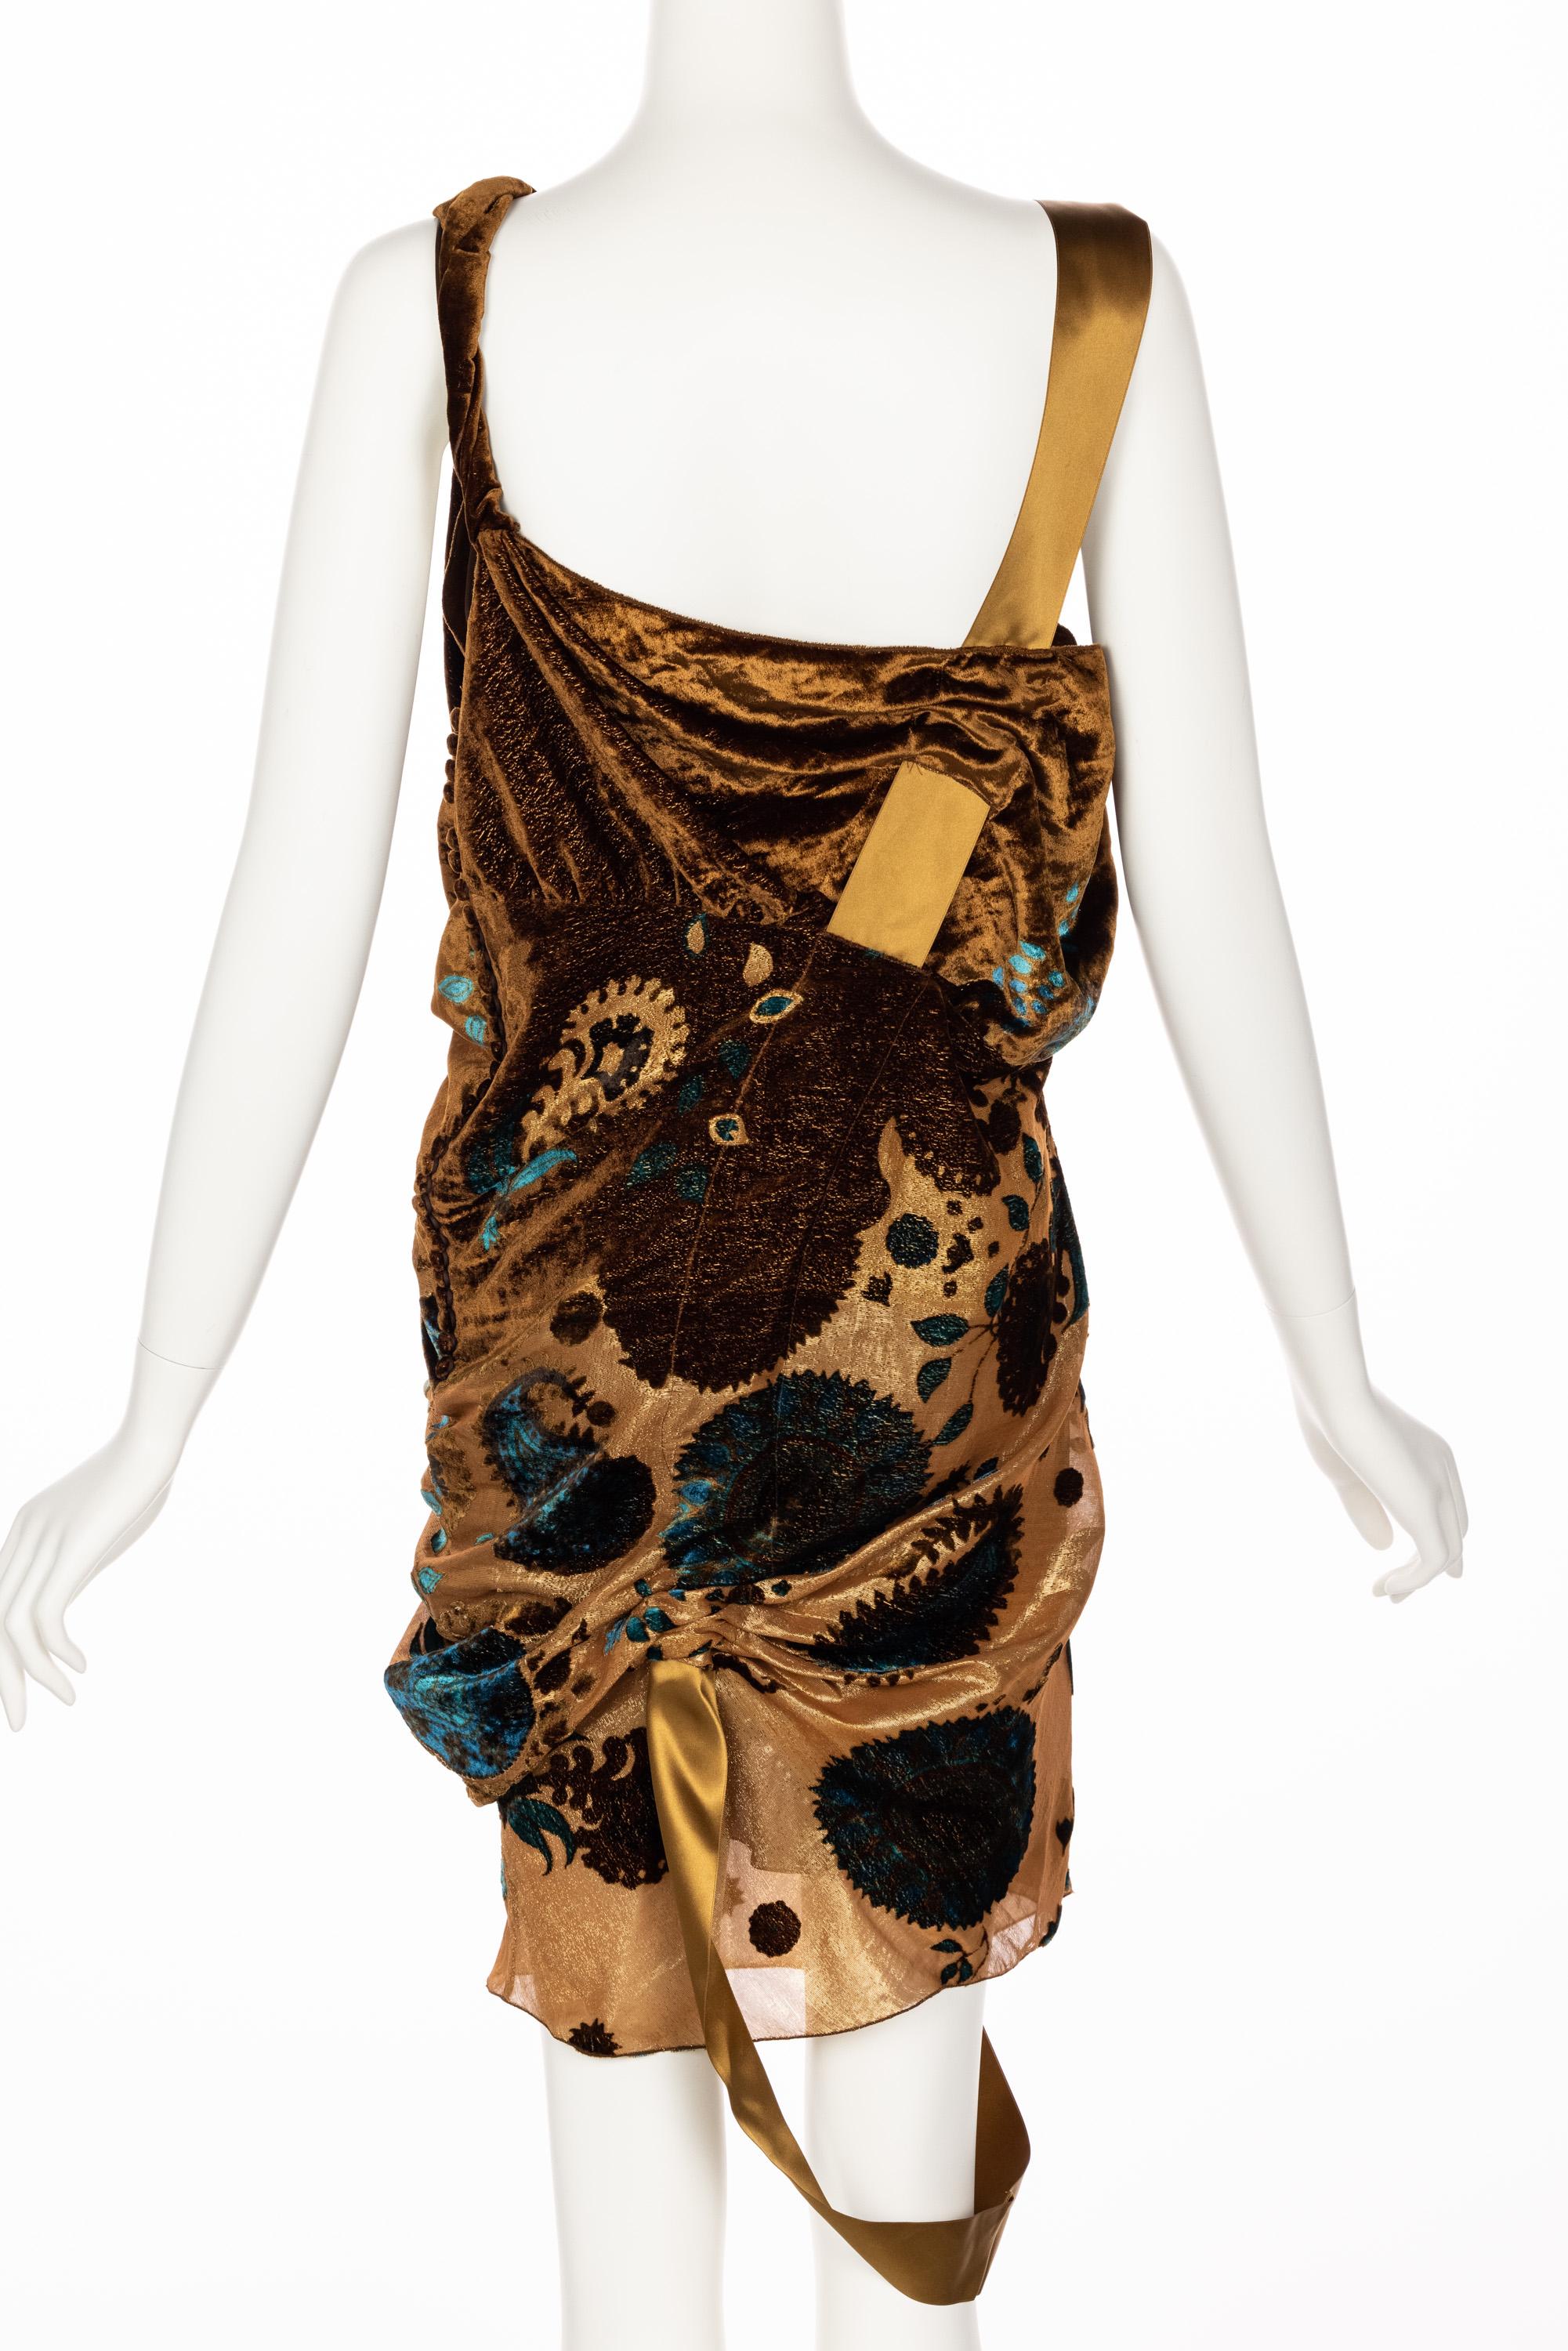  Christian Dior Galliano Golden Brown Turquoise Velvet Floral Devore Dress 2005 1